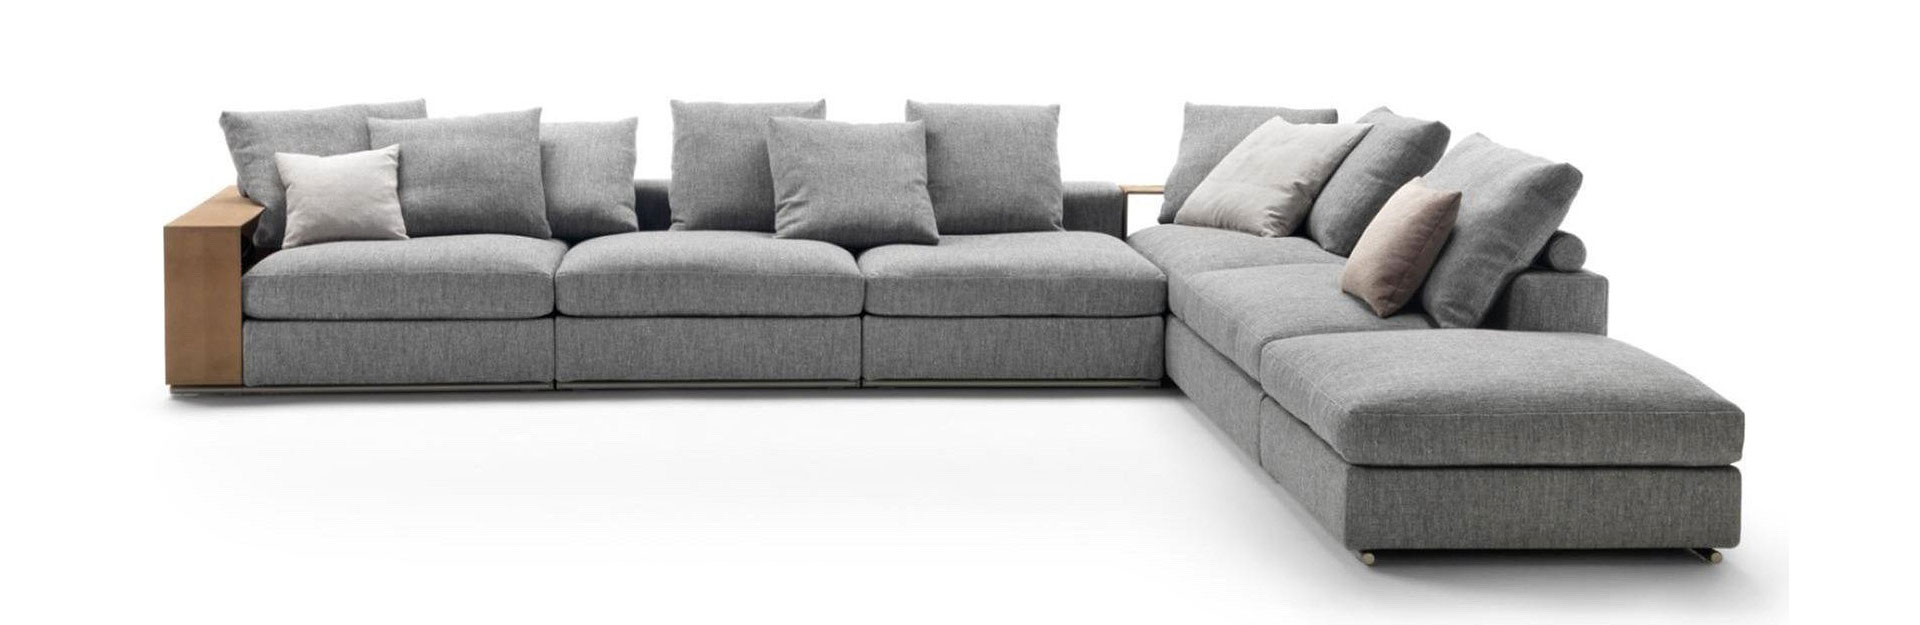 Groundpiece Sofa Flexform 2001 - 2021